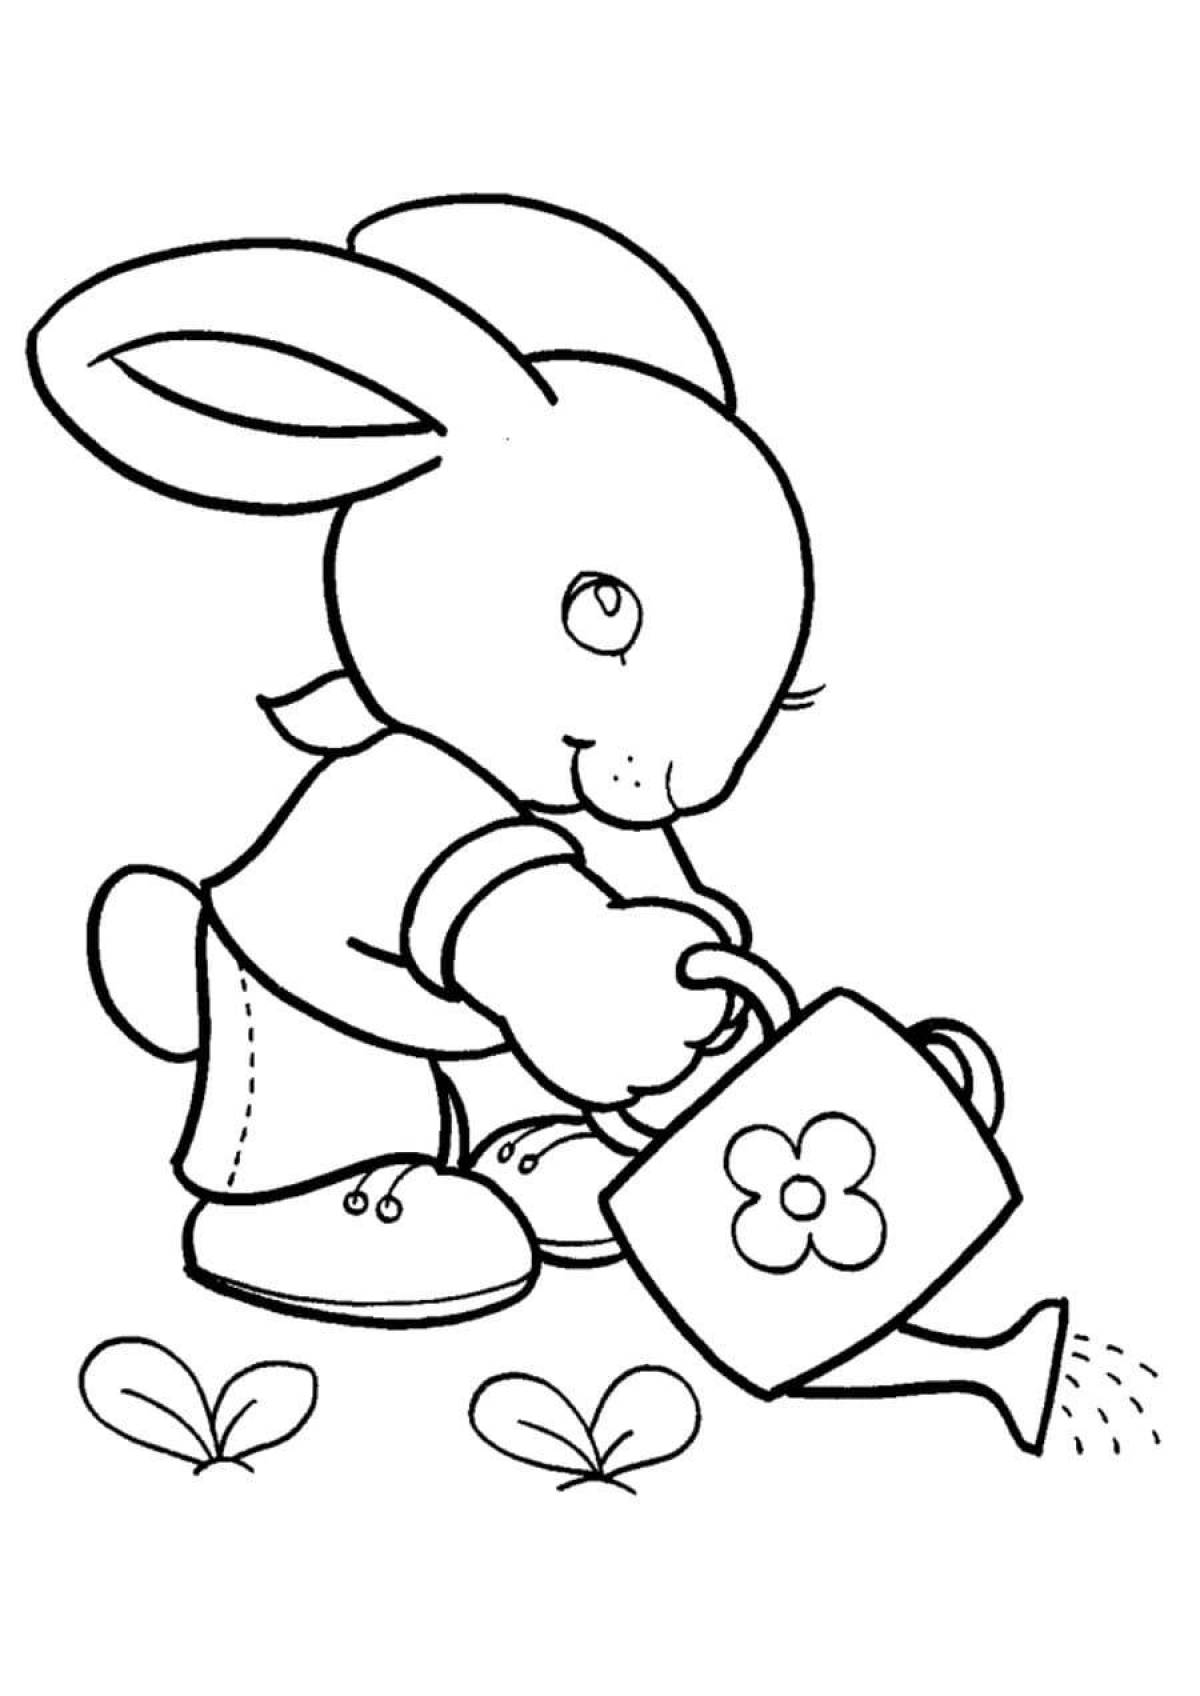 Bright rabbit coloring book